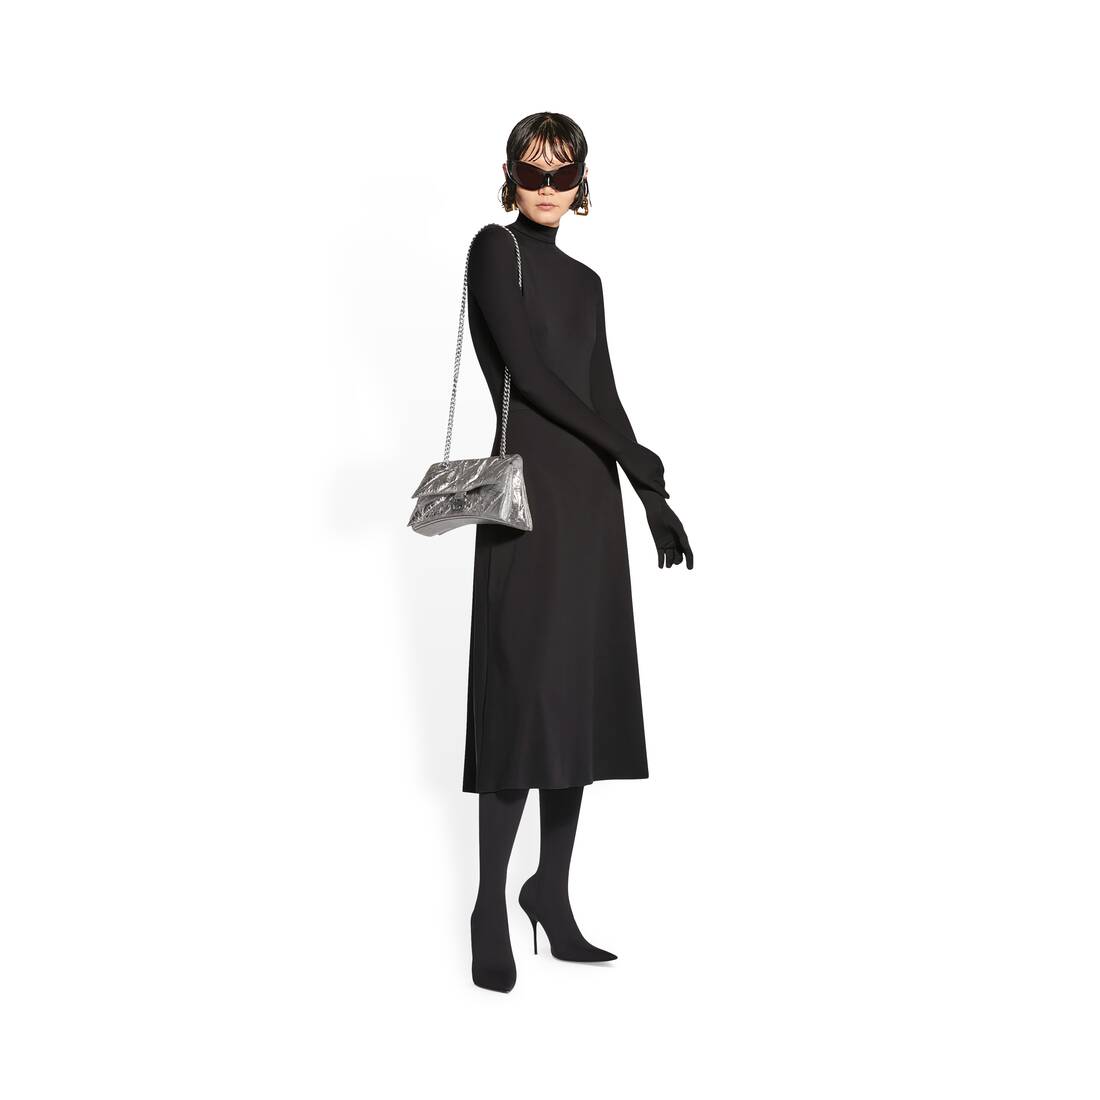 Balenciaga Women's Monaco Small Chain Shoulder Bag - Black